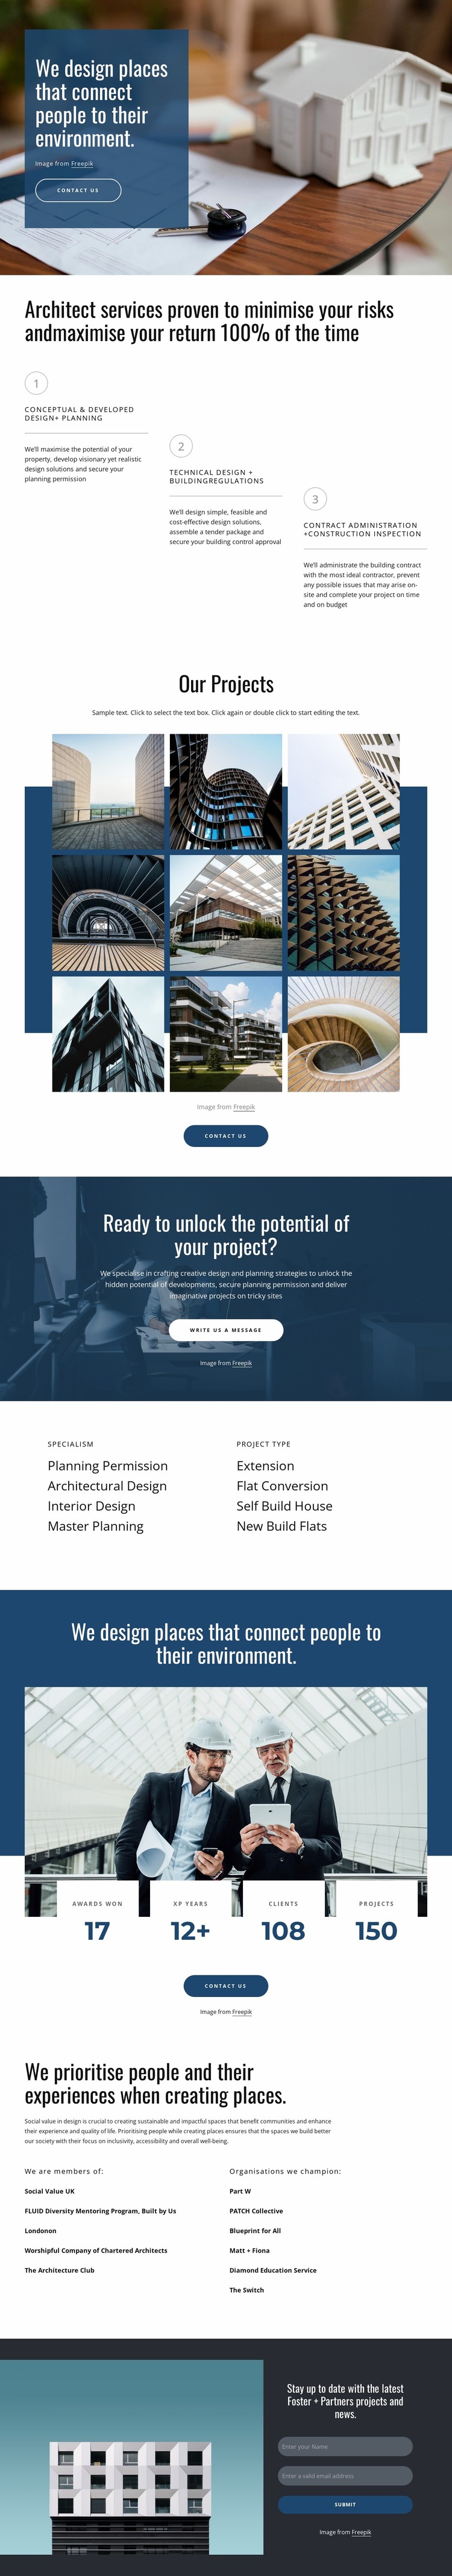 We design amazing projects Website Mockup